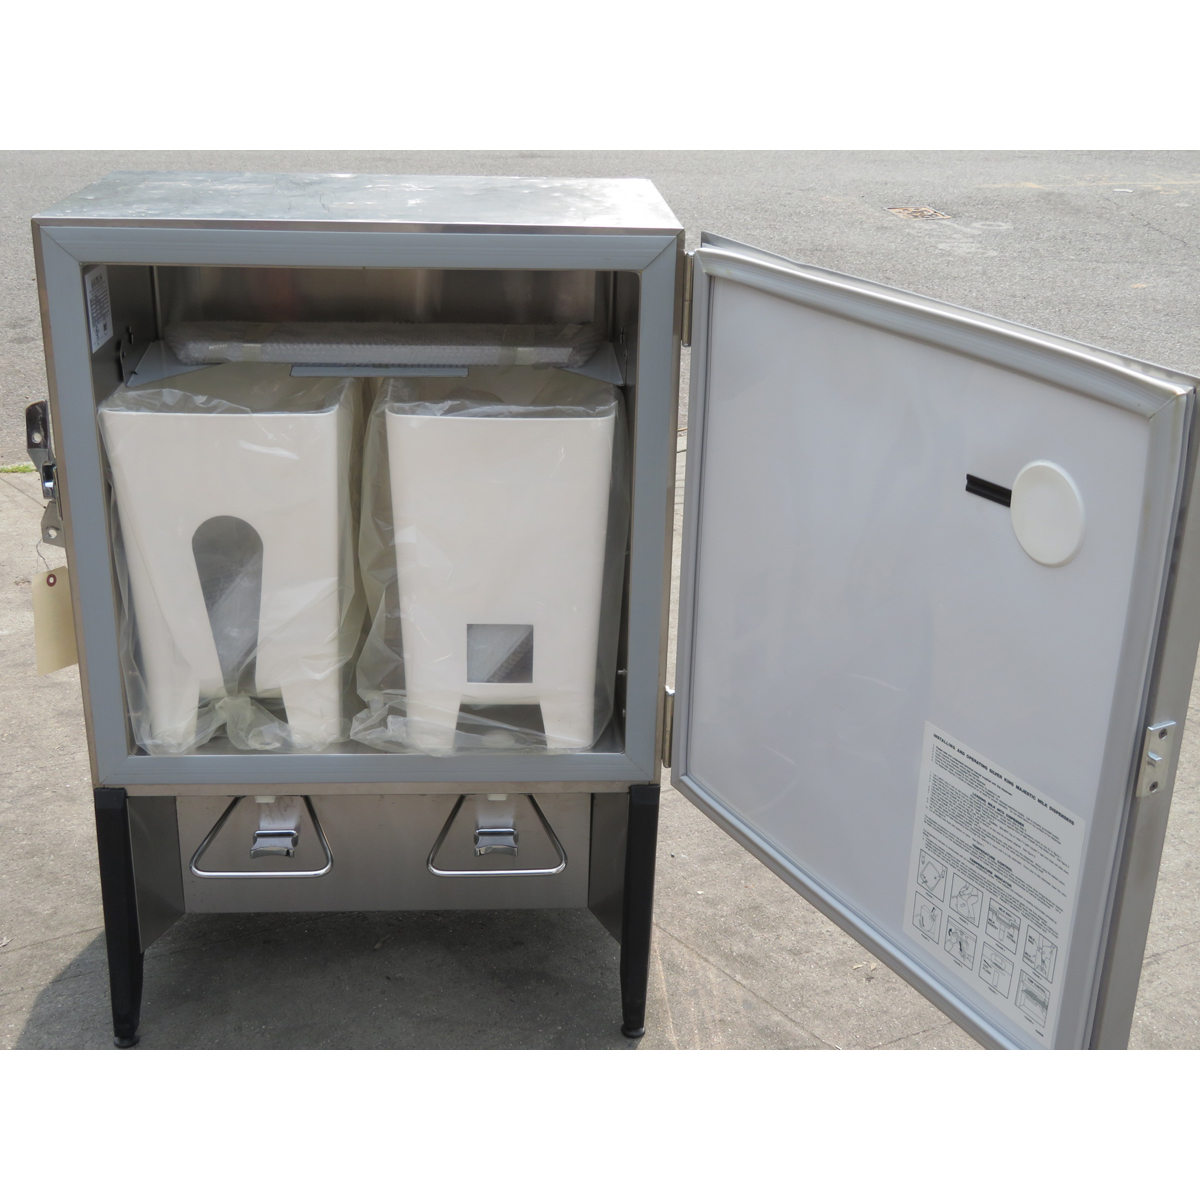 Silver King SKMAJ2 Majestic Milk Dispenser, Brand New Never Used, Great Condition image 2